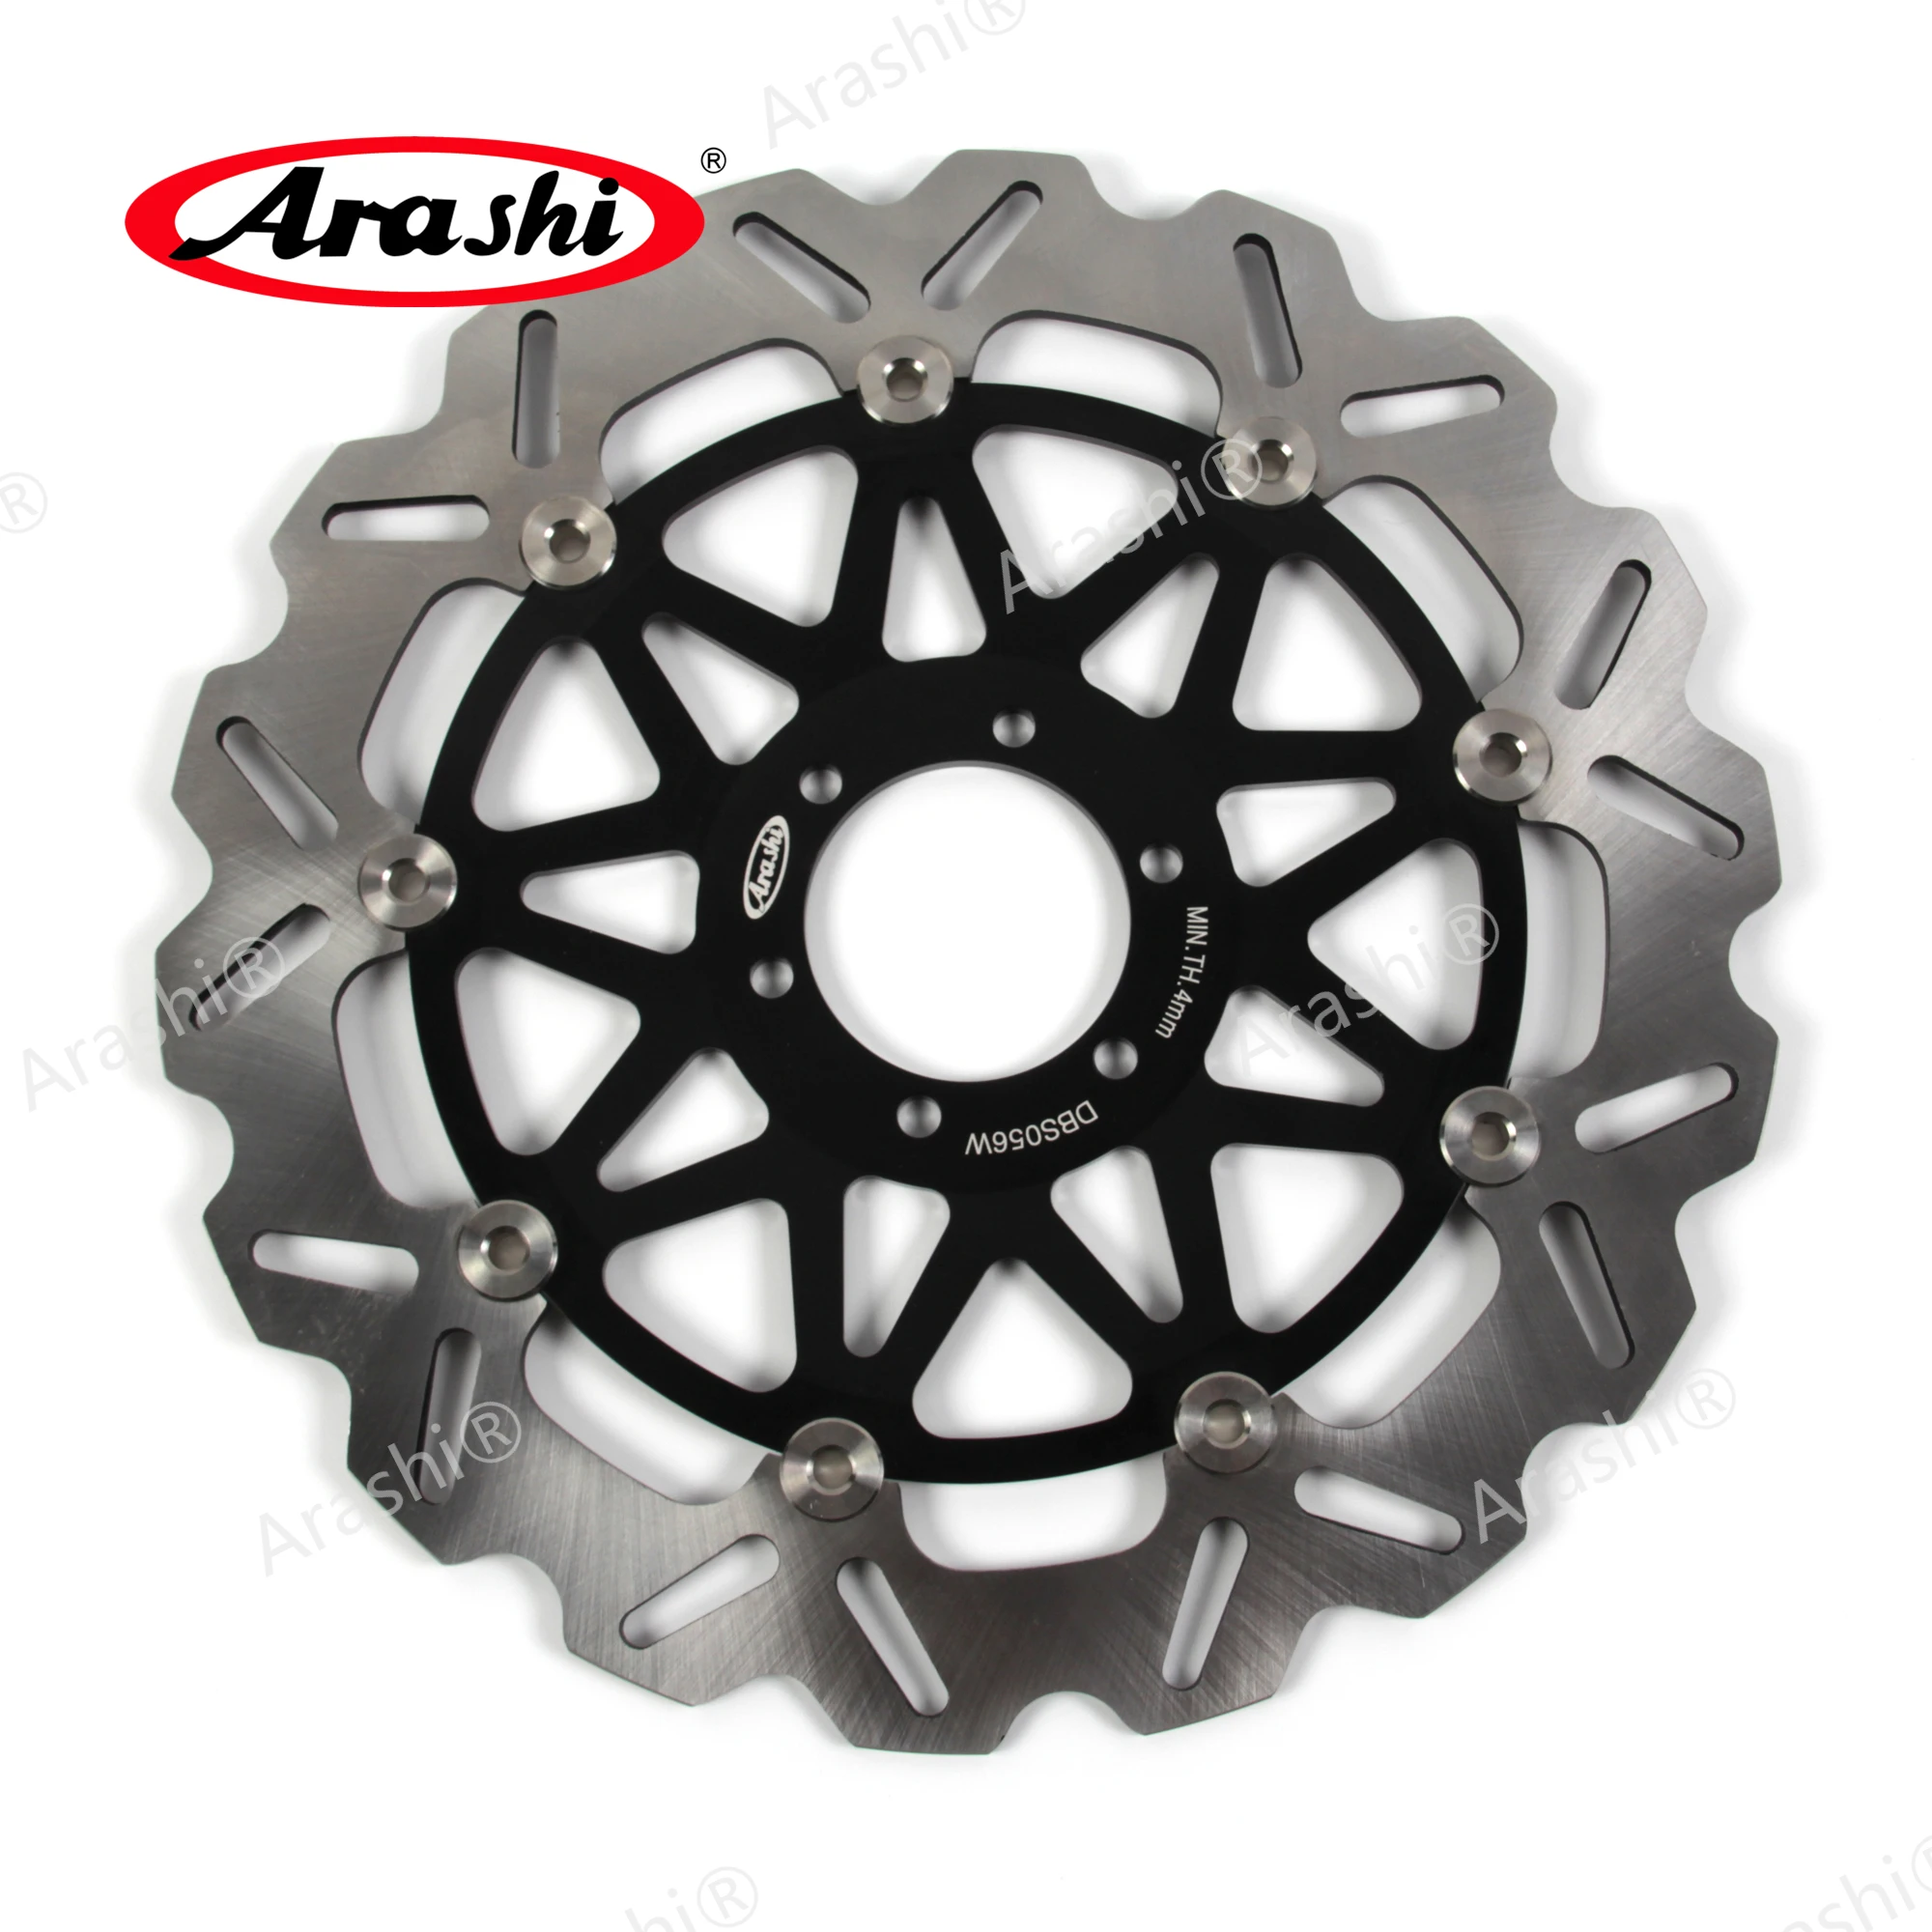 

ARASHI 1PCS CNC Floating Front Brake Rotors Disc For DUCATI MONSTER / MULTISTRADA single disk 620 2005 2006 Motorcycle Aluminium